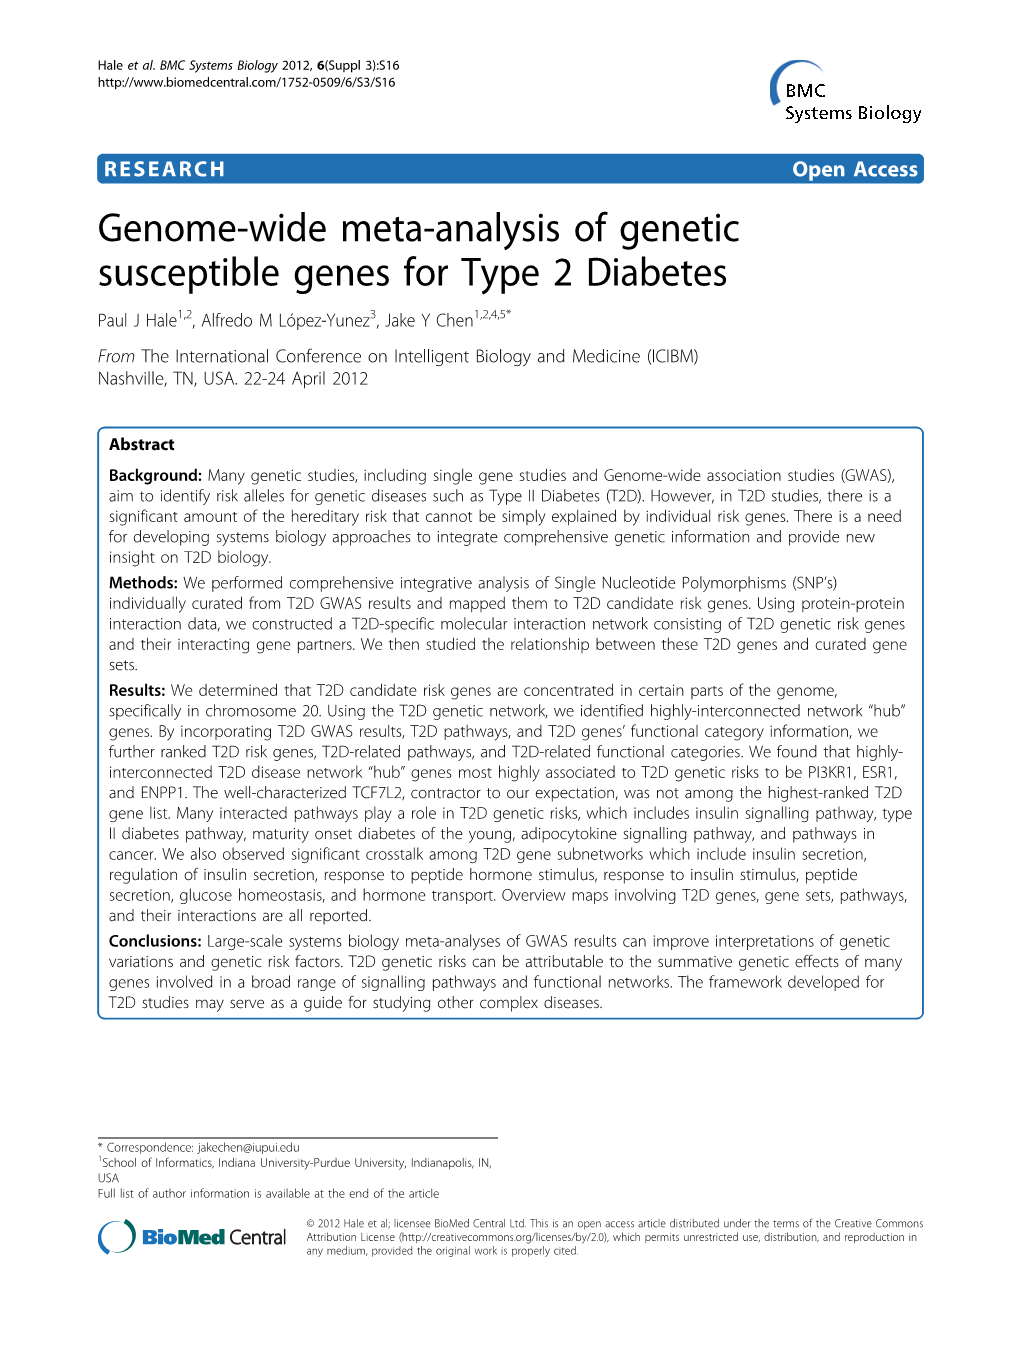 Genome-Wide Meta-Analysis of Genetic Susceptible Genes for Type